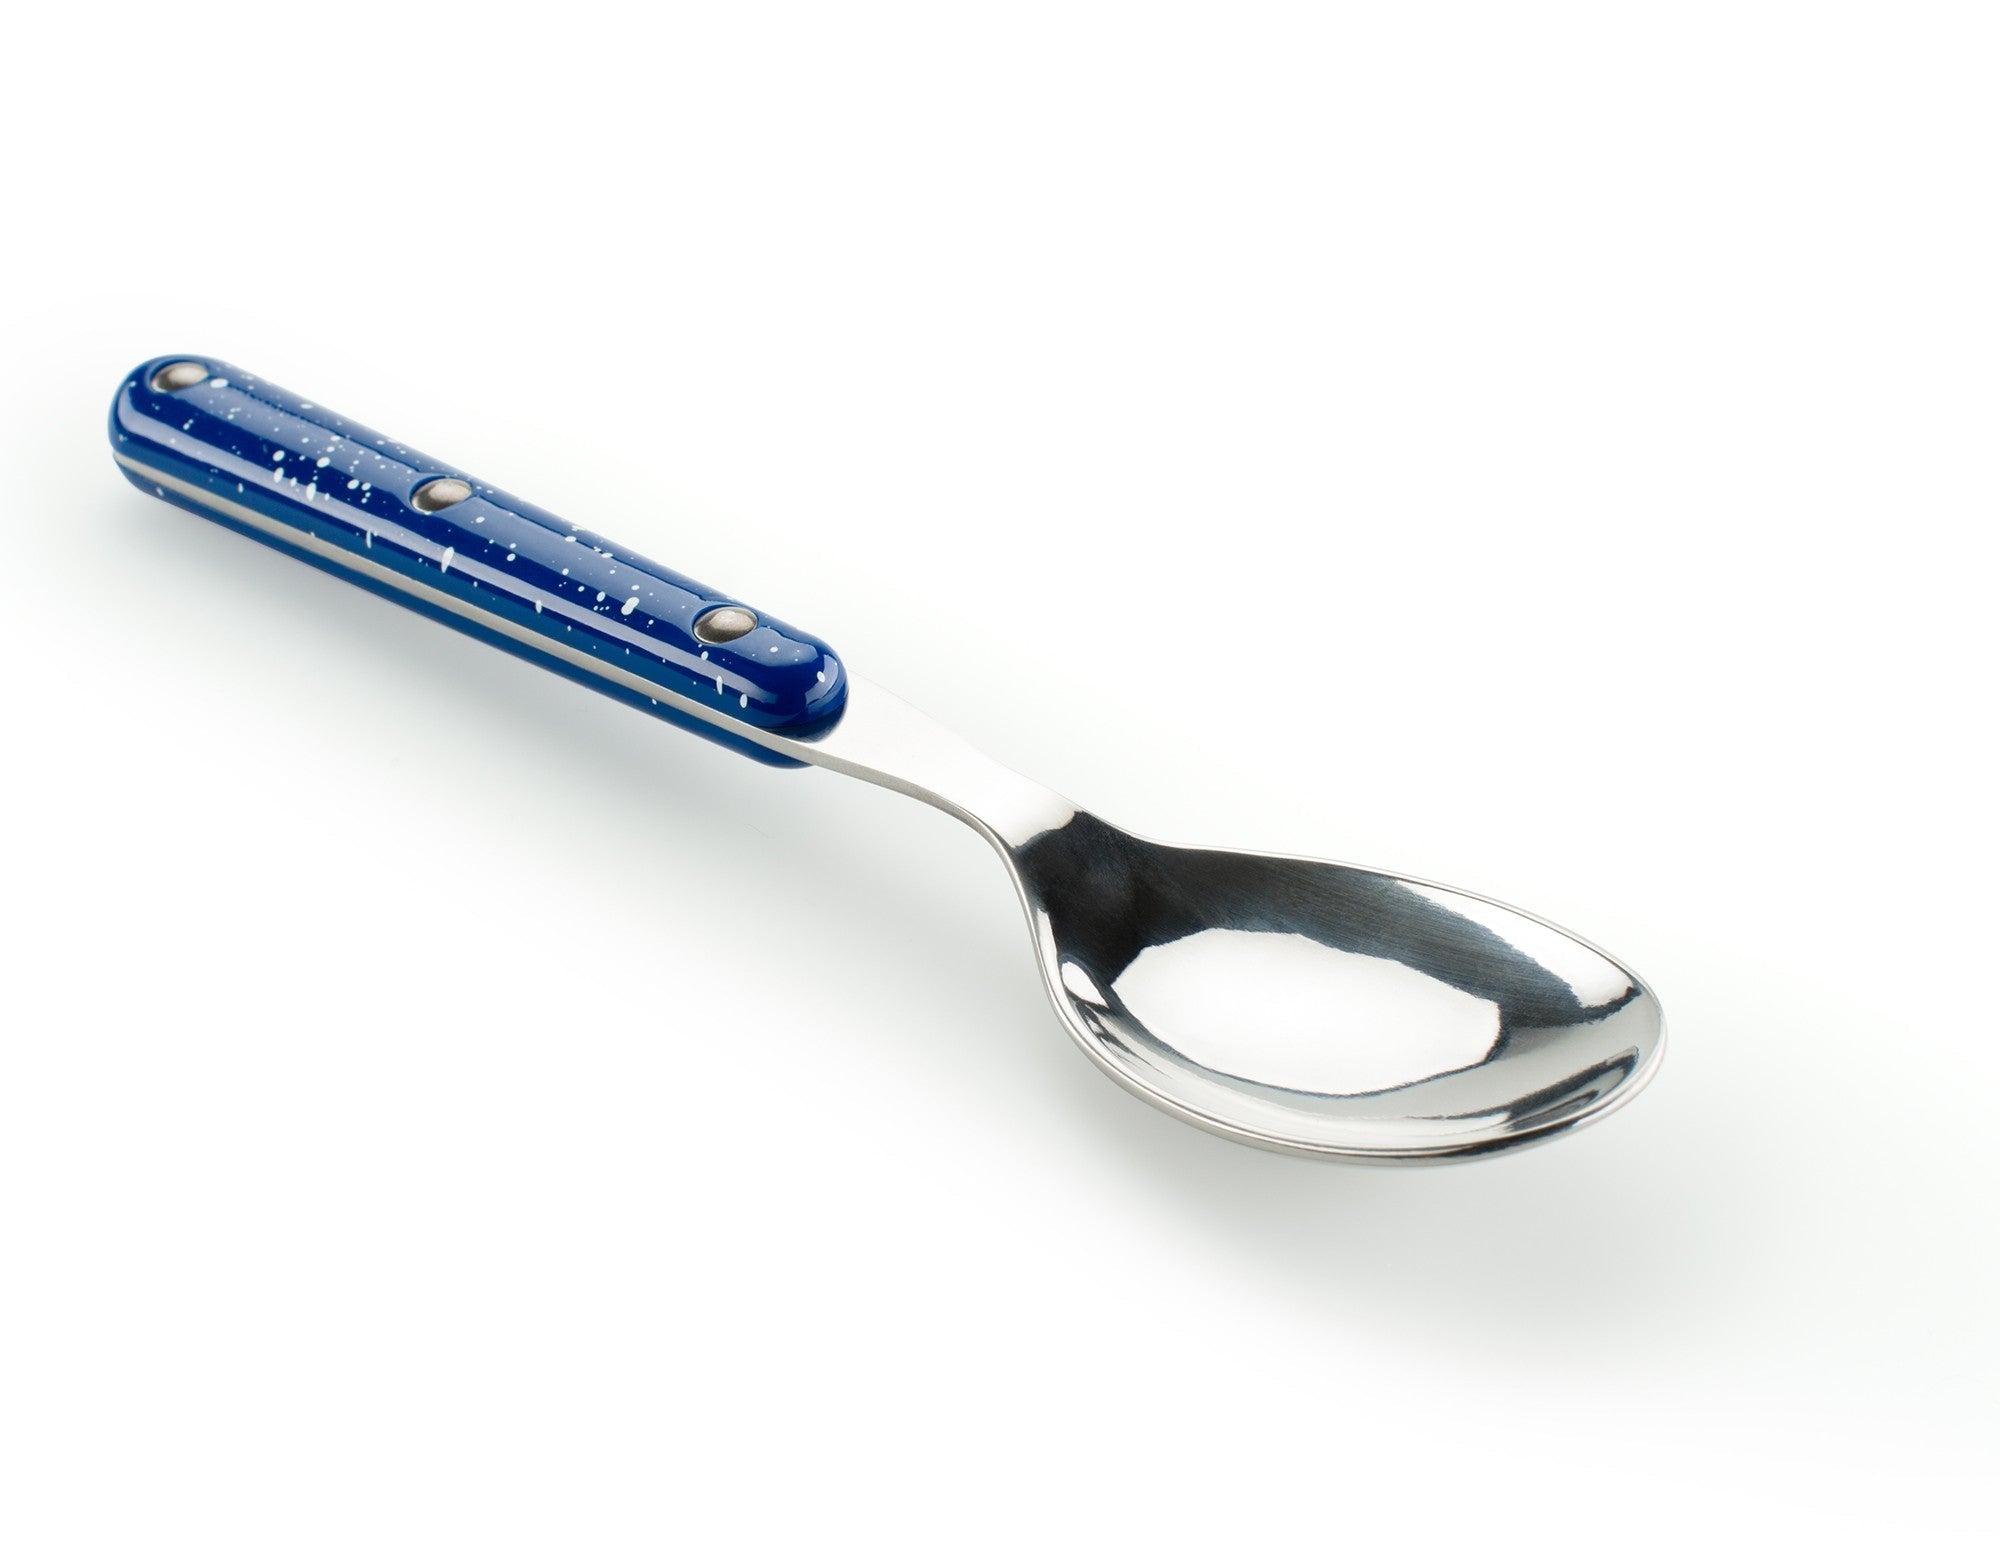 GSI Pioneer Tablespoon